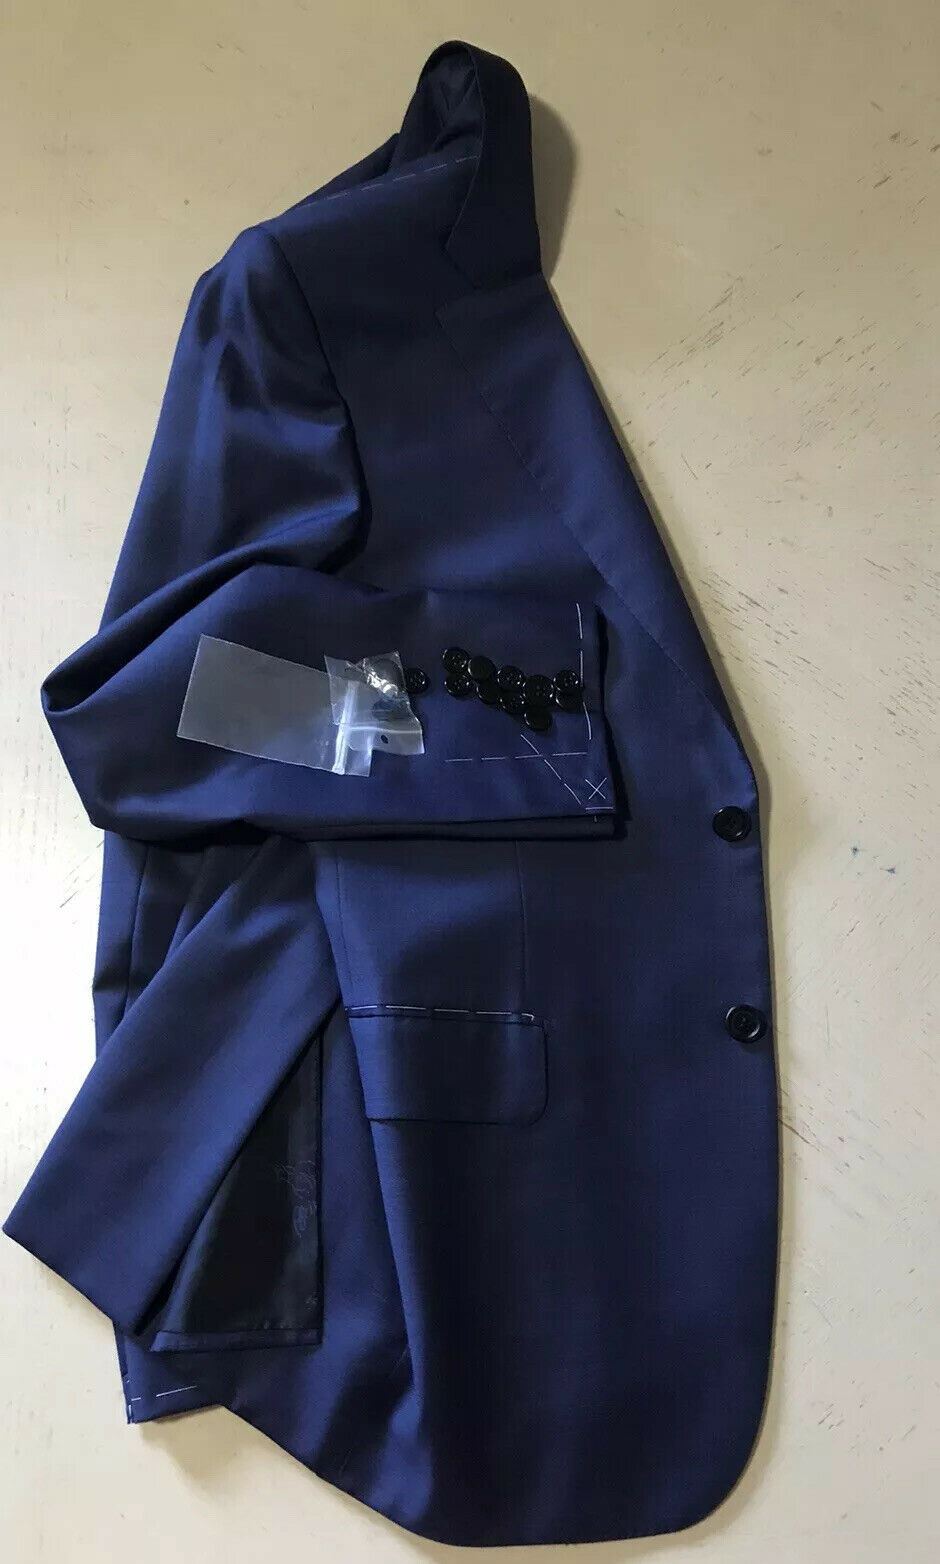 NWT $5700 Brioni Men’s Wool Sport Coat Blazer Jacket Blue 40R US/50R Eu Italy